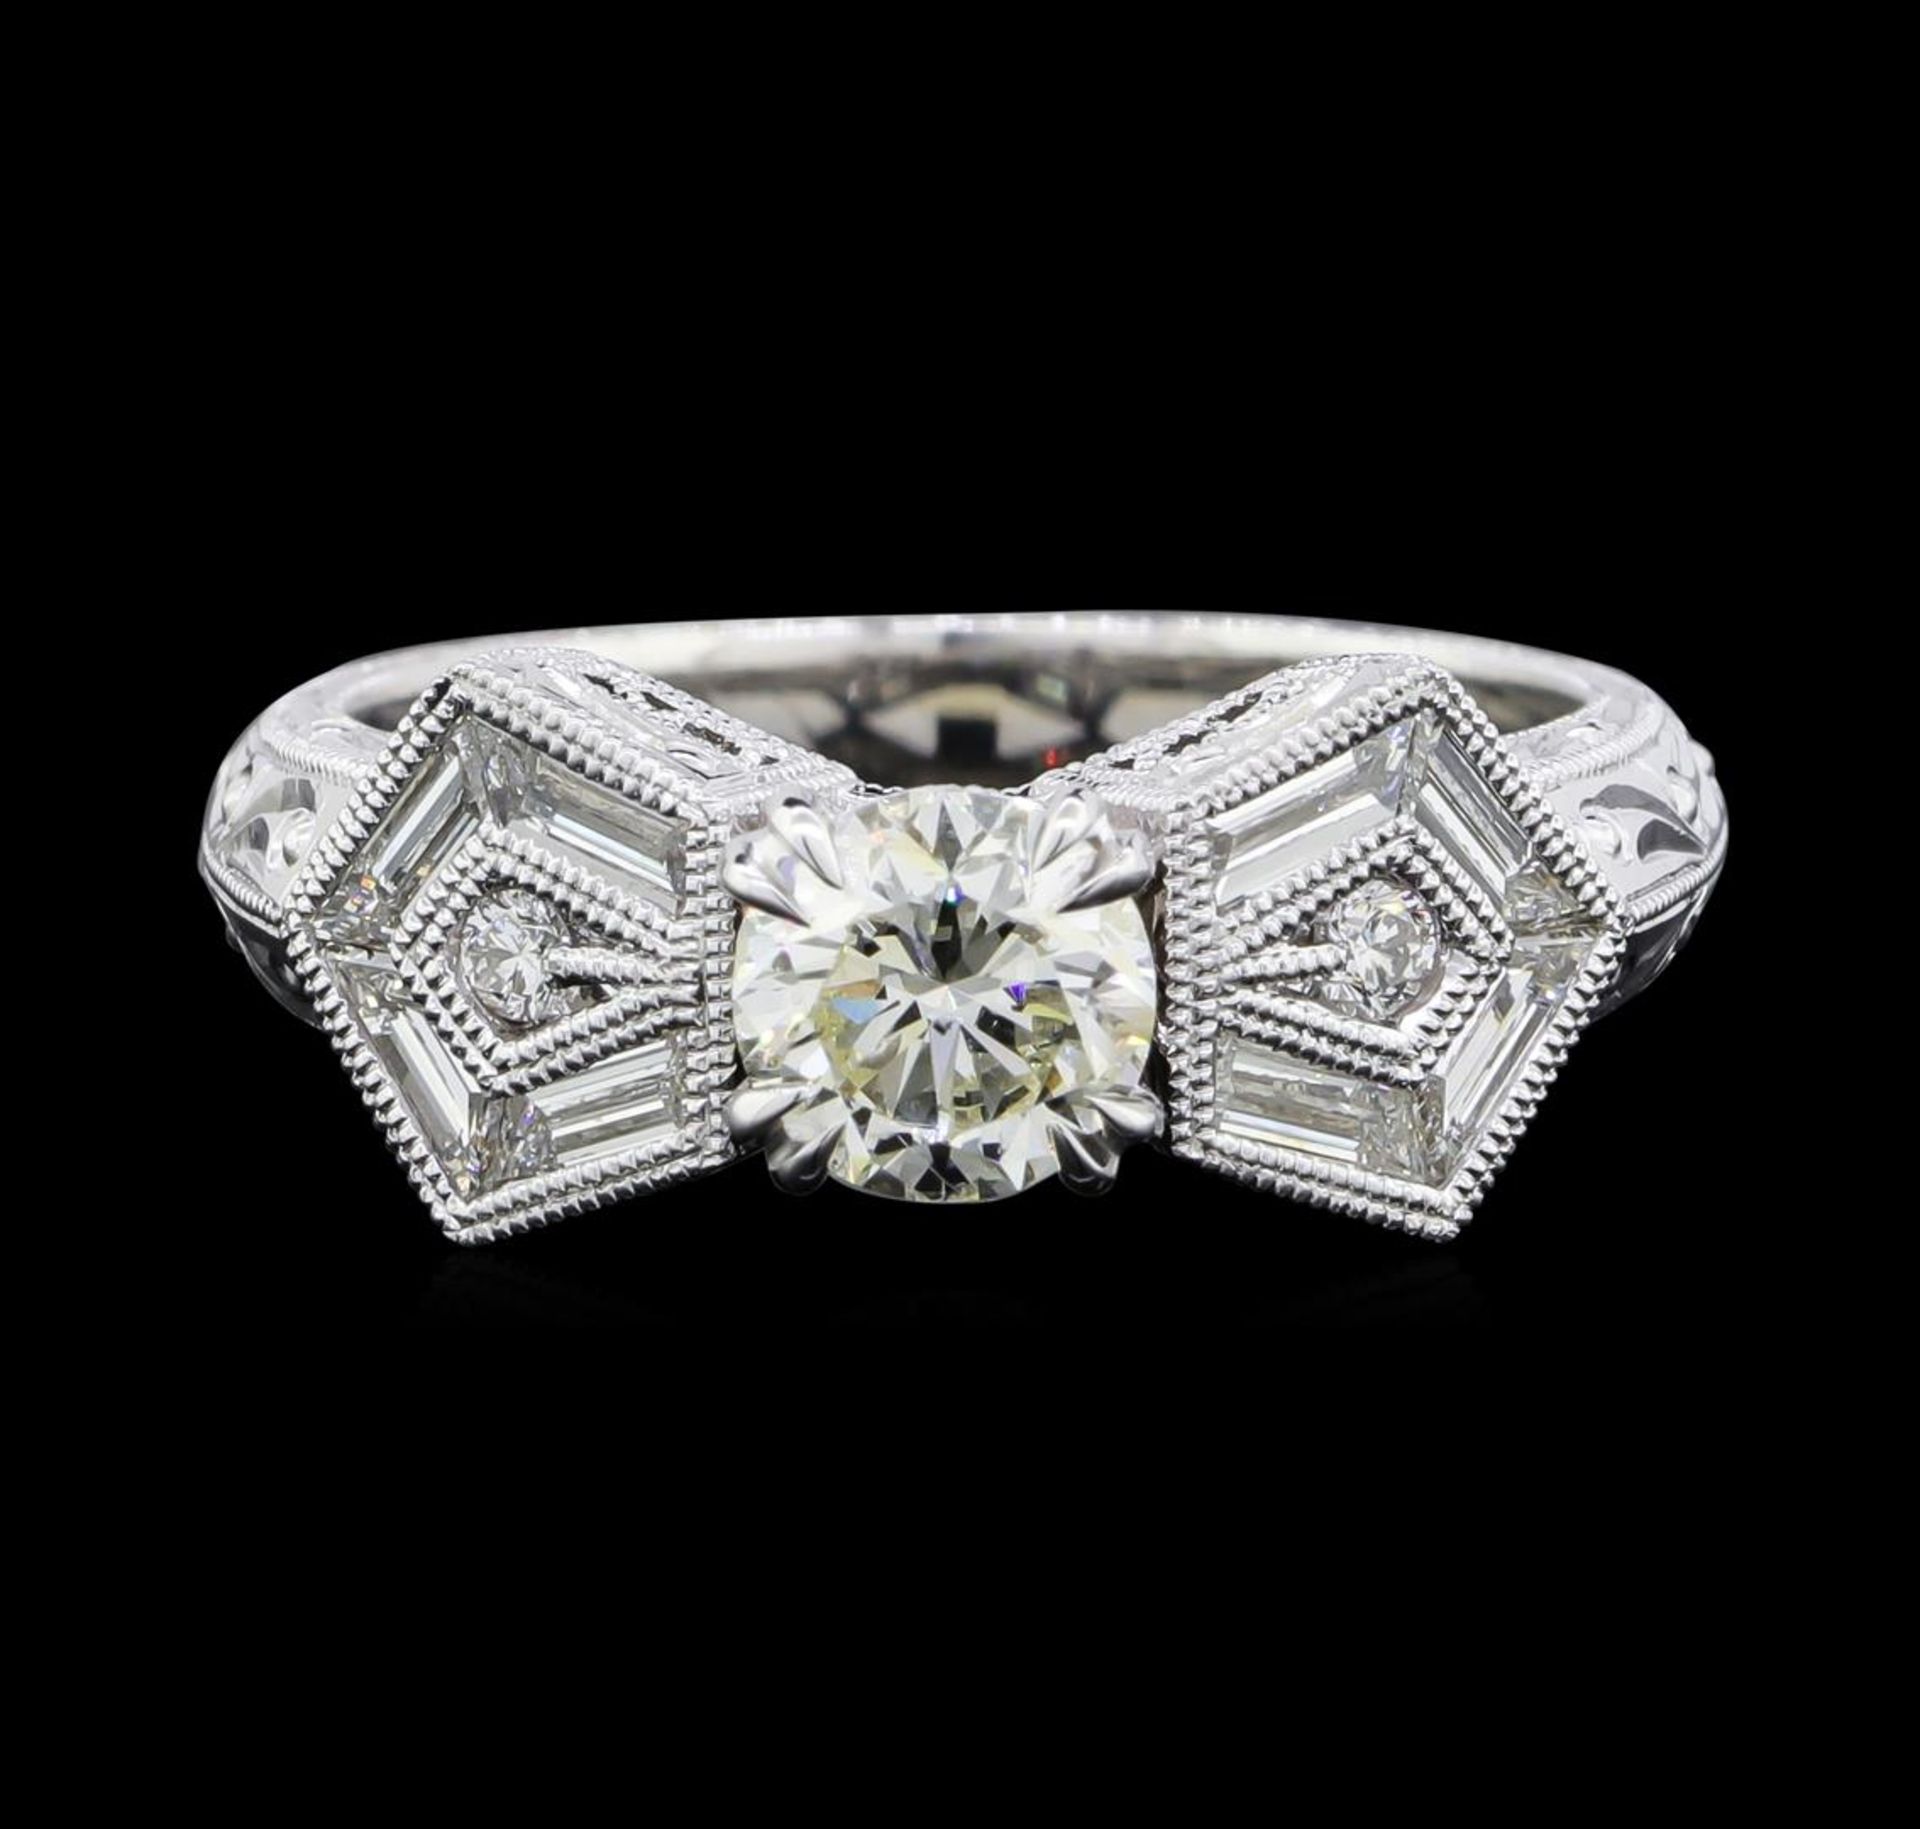 1.37 ctw Diamond Ring - 18KT White Gold - Image 3 of 7